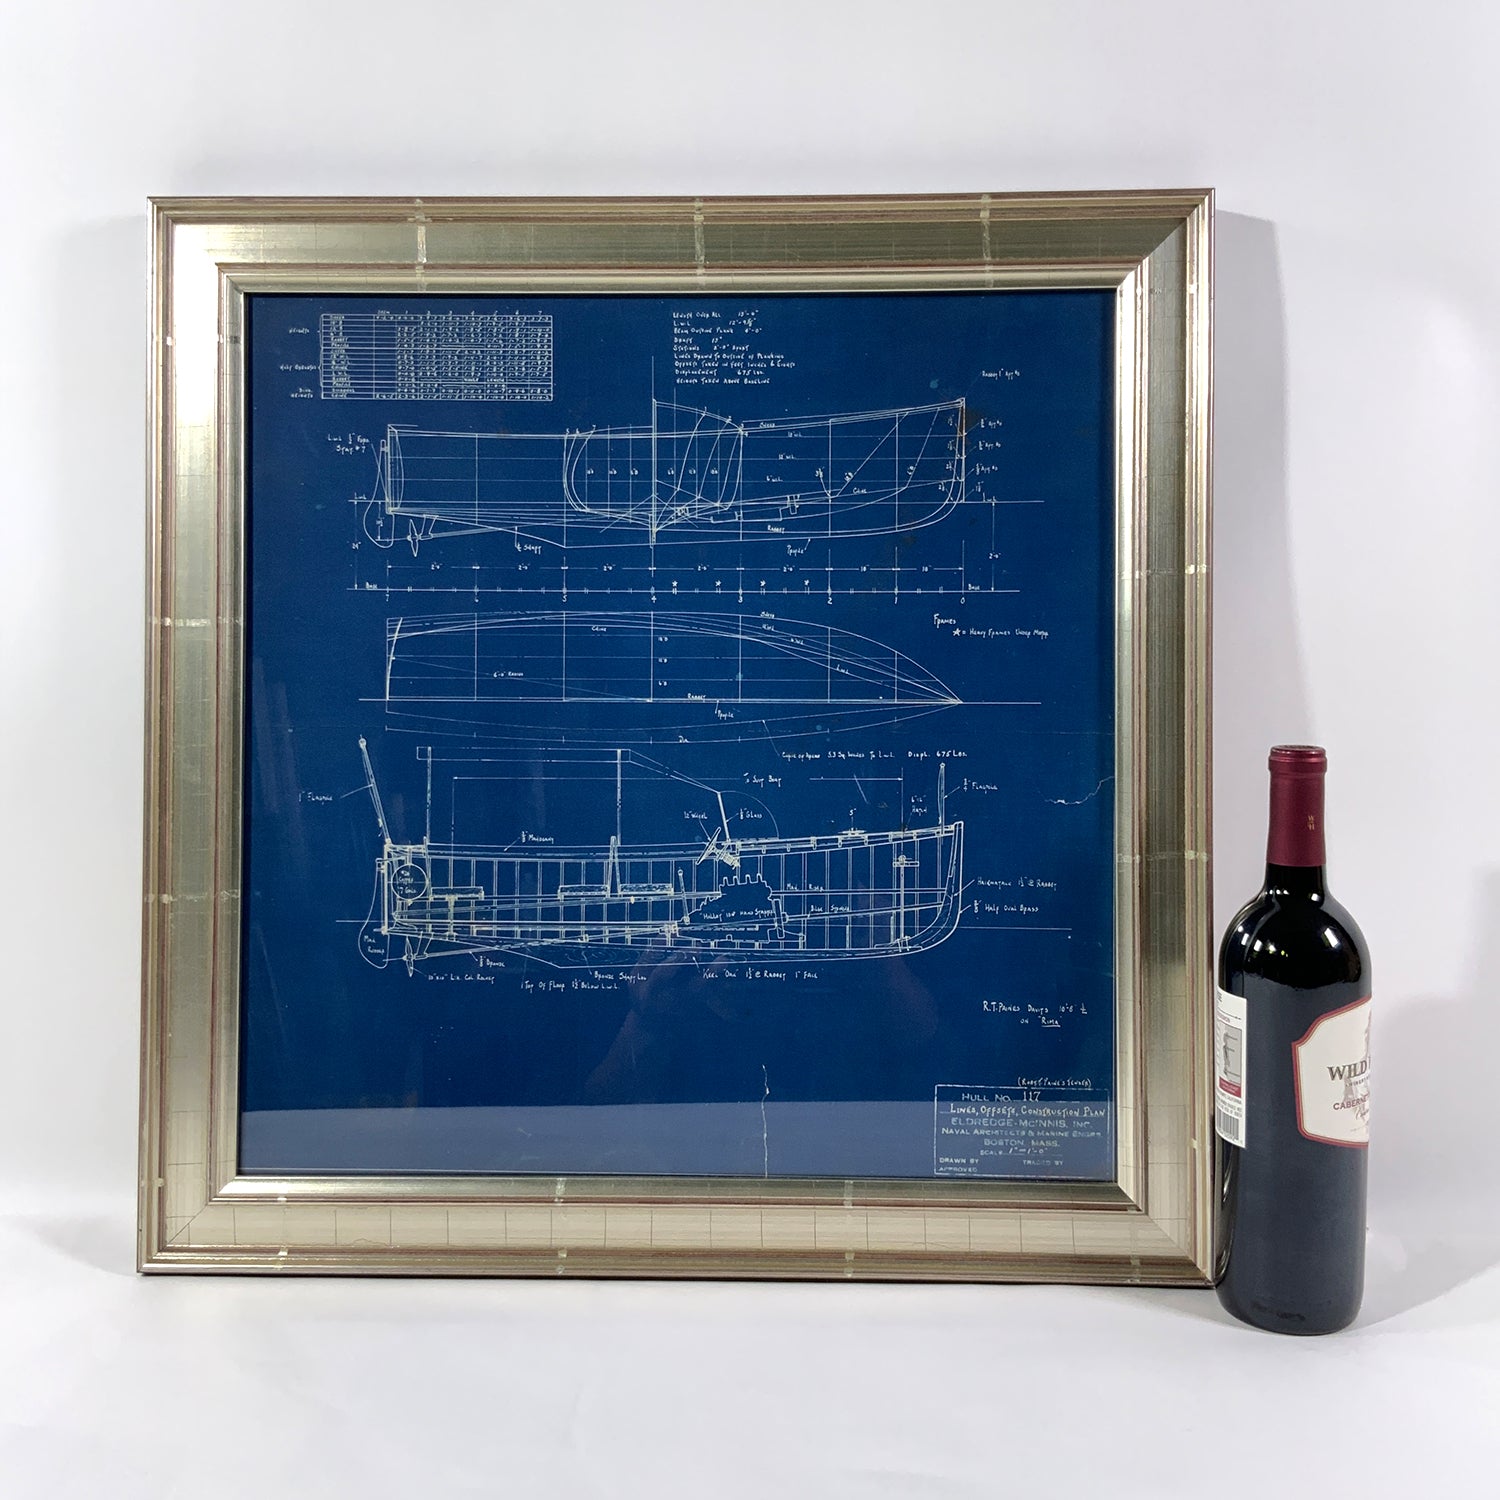 Charming Original Blueprint For Yacht Tender Onboard Yacht Rima - Lannan Gallery